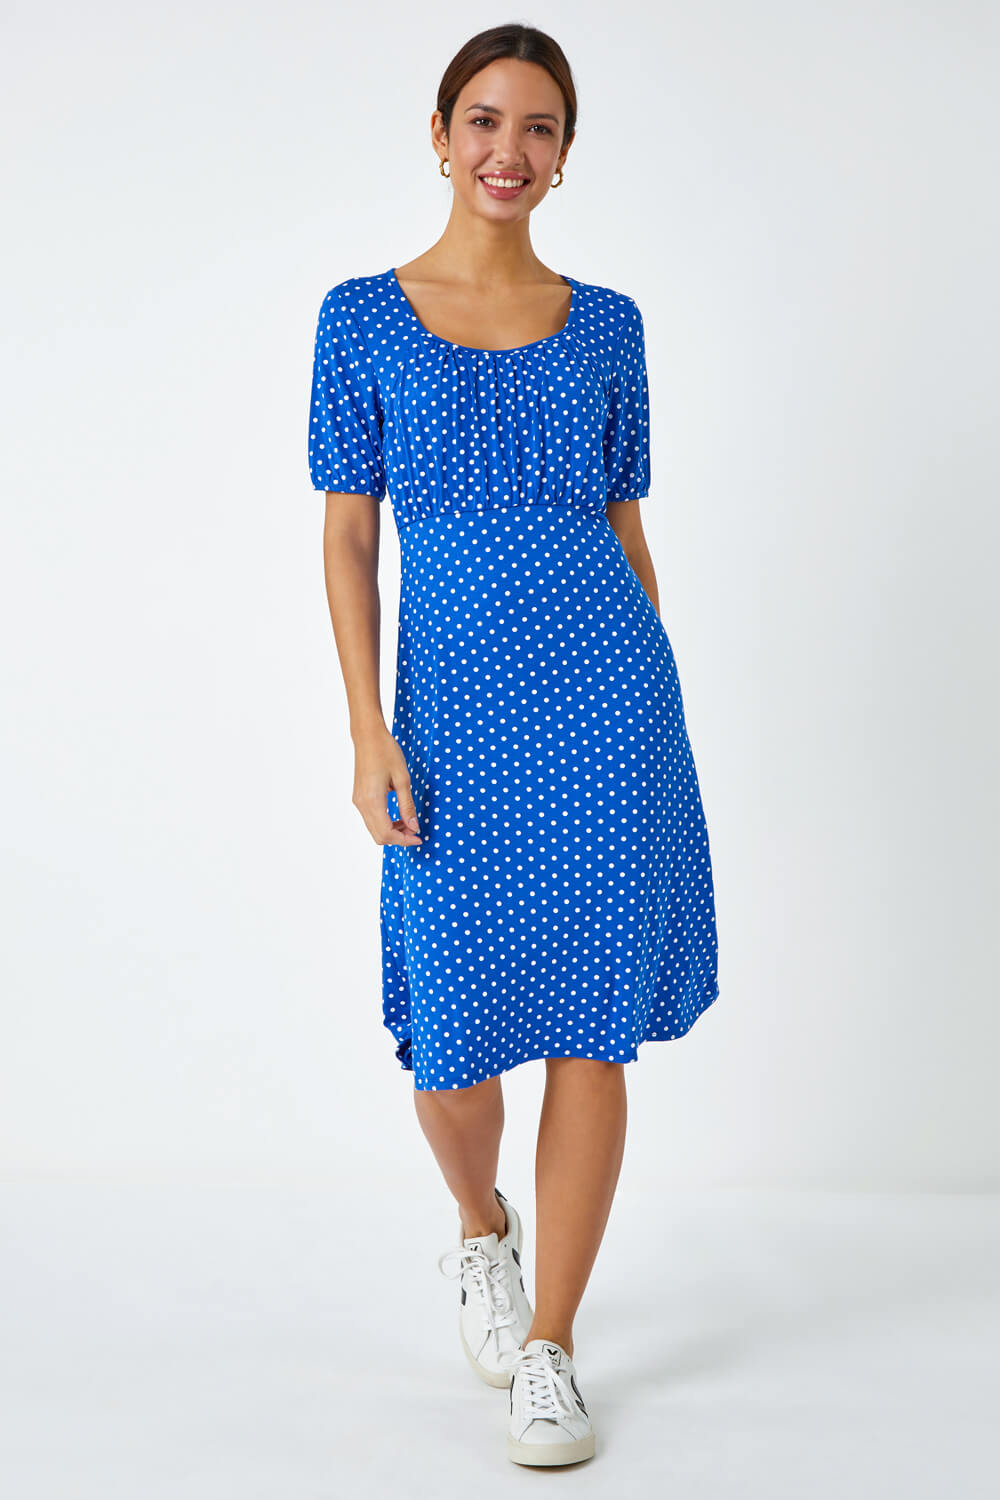 Royal Blue Polka Dot Print Stretch Dress, Image 2 of 5